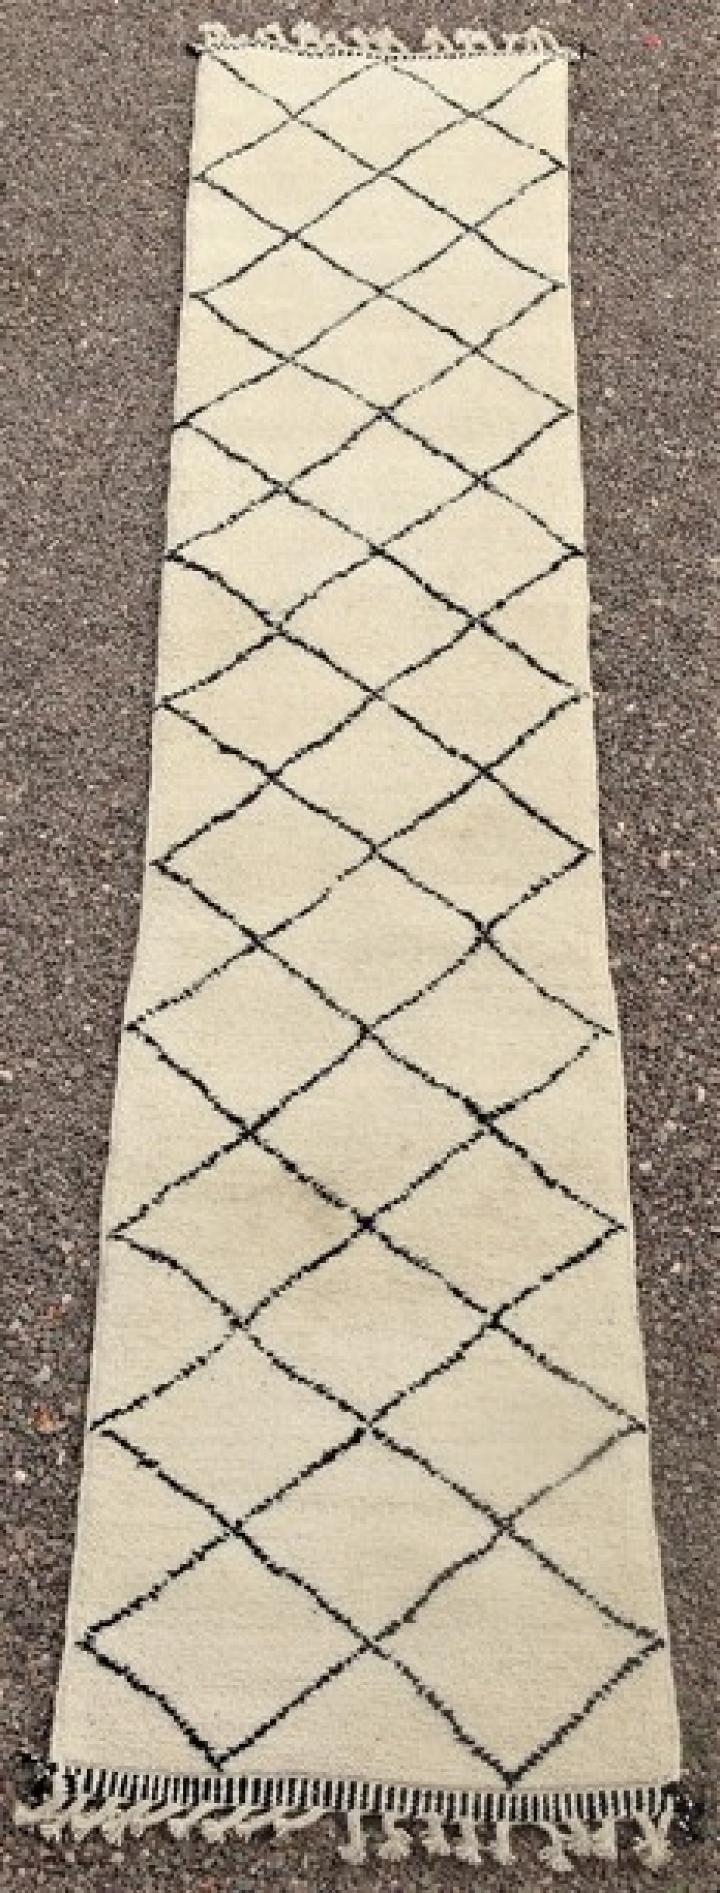 Berber rug #BO51122 type Beni Ourain Large sizes